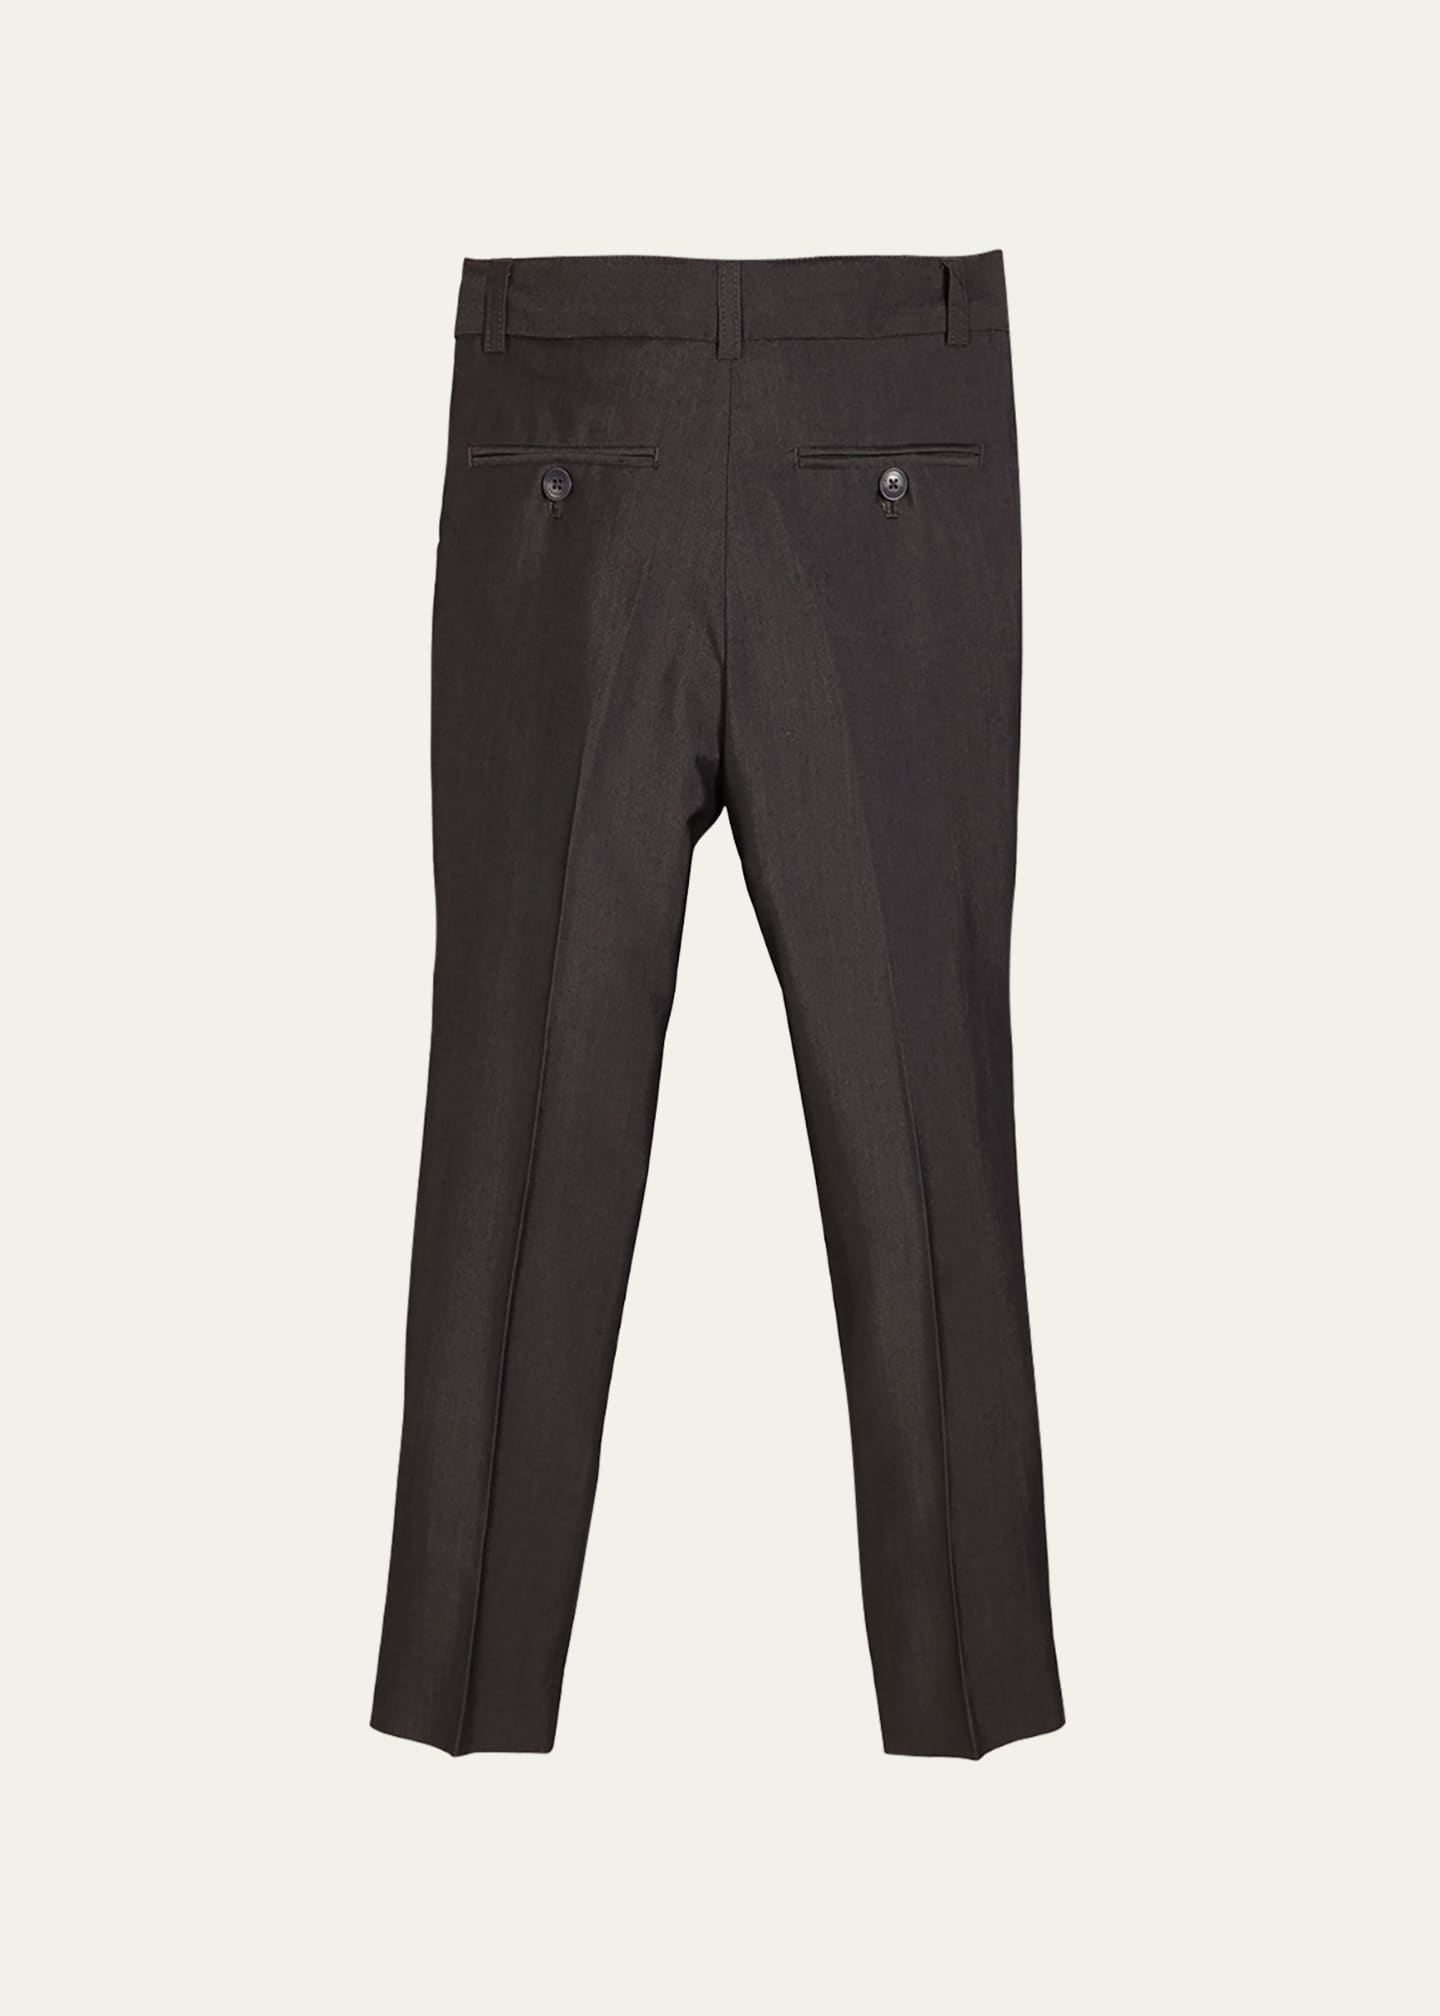 Appaman Slim Suit Pants, Charcoal, Size 4-14 Image 2 of 2